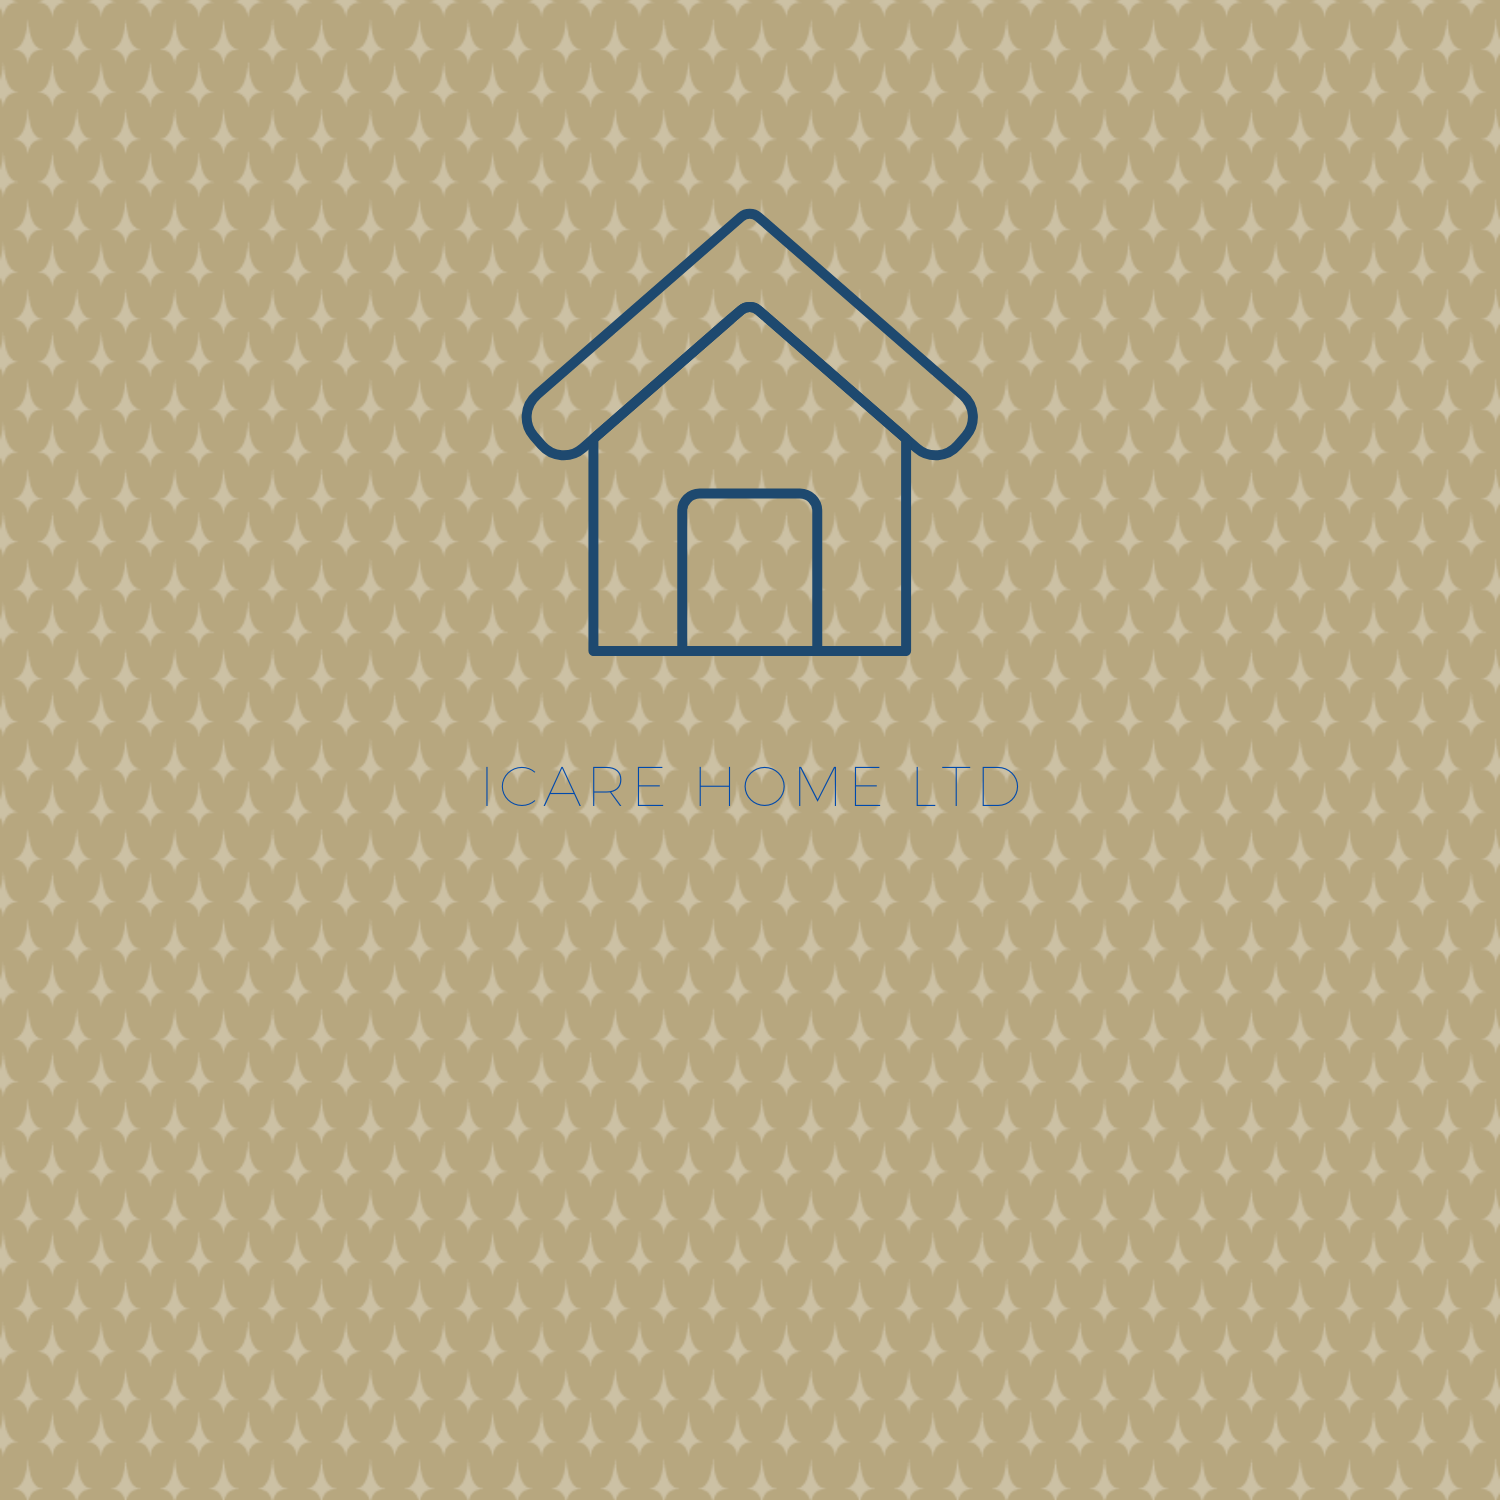 logo of a house